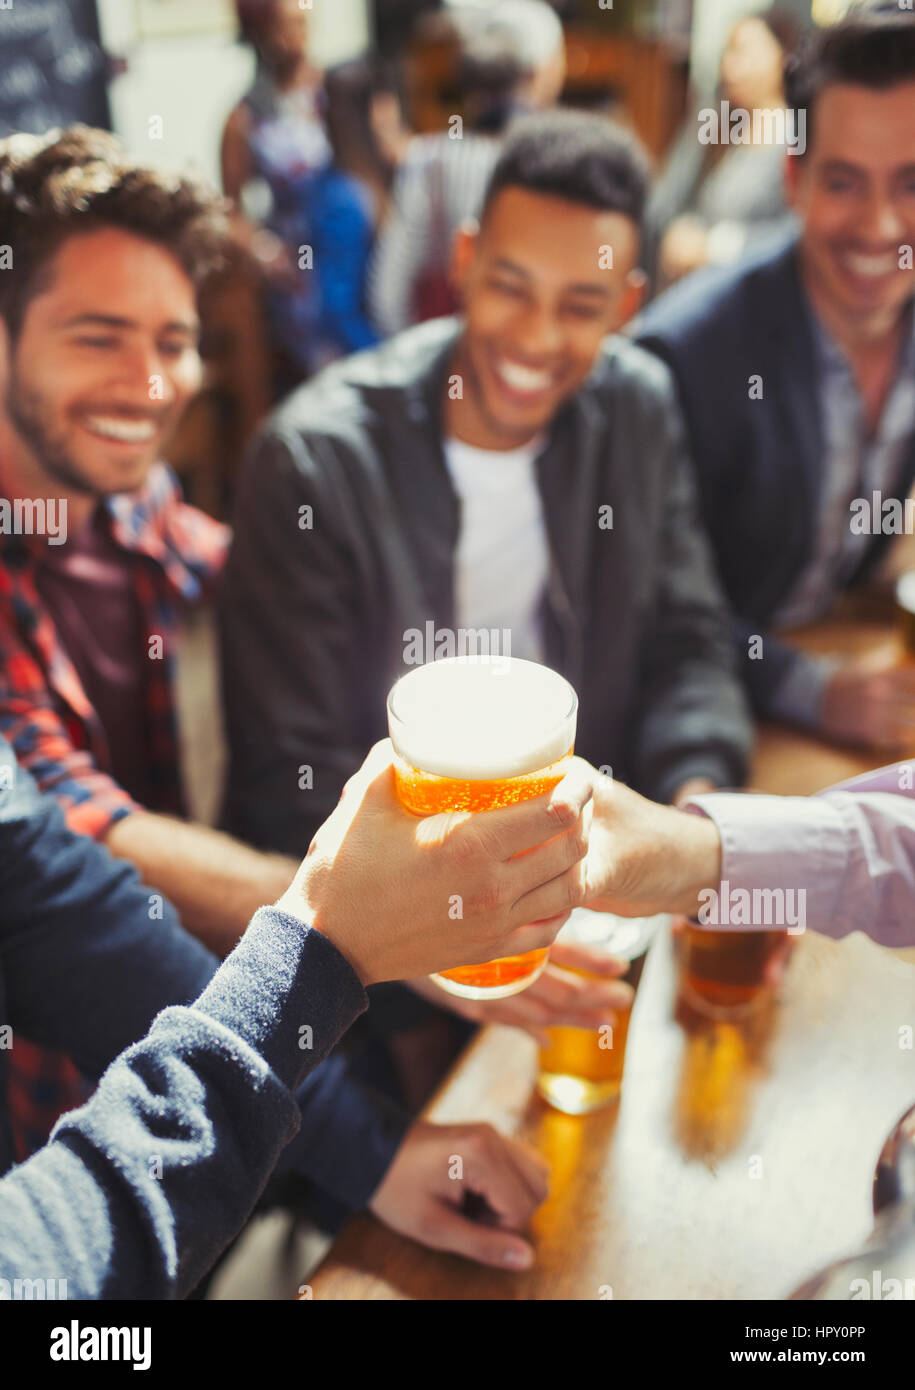 Waiter handing beer to man at bar Stock Photo